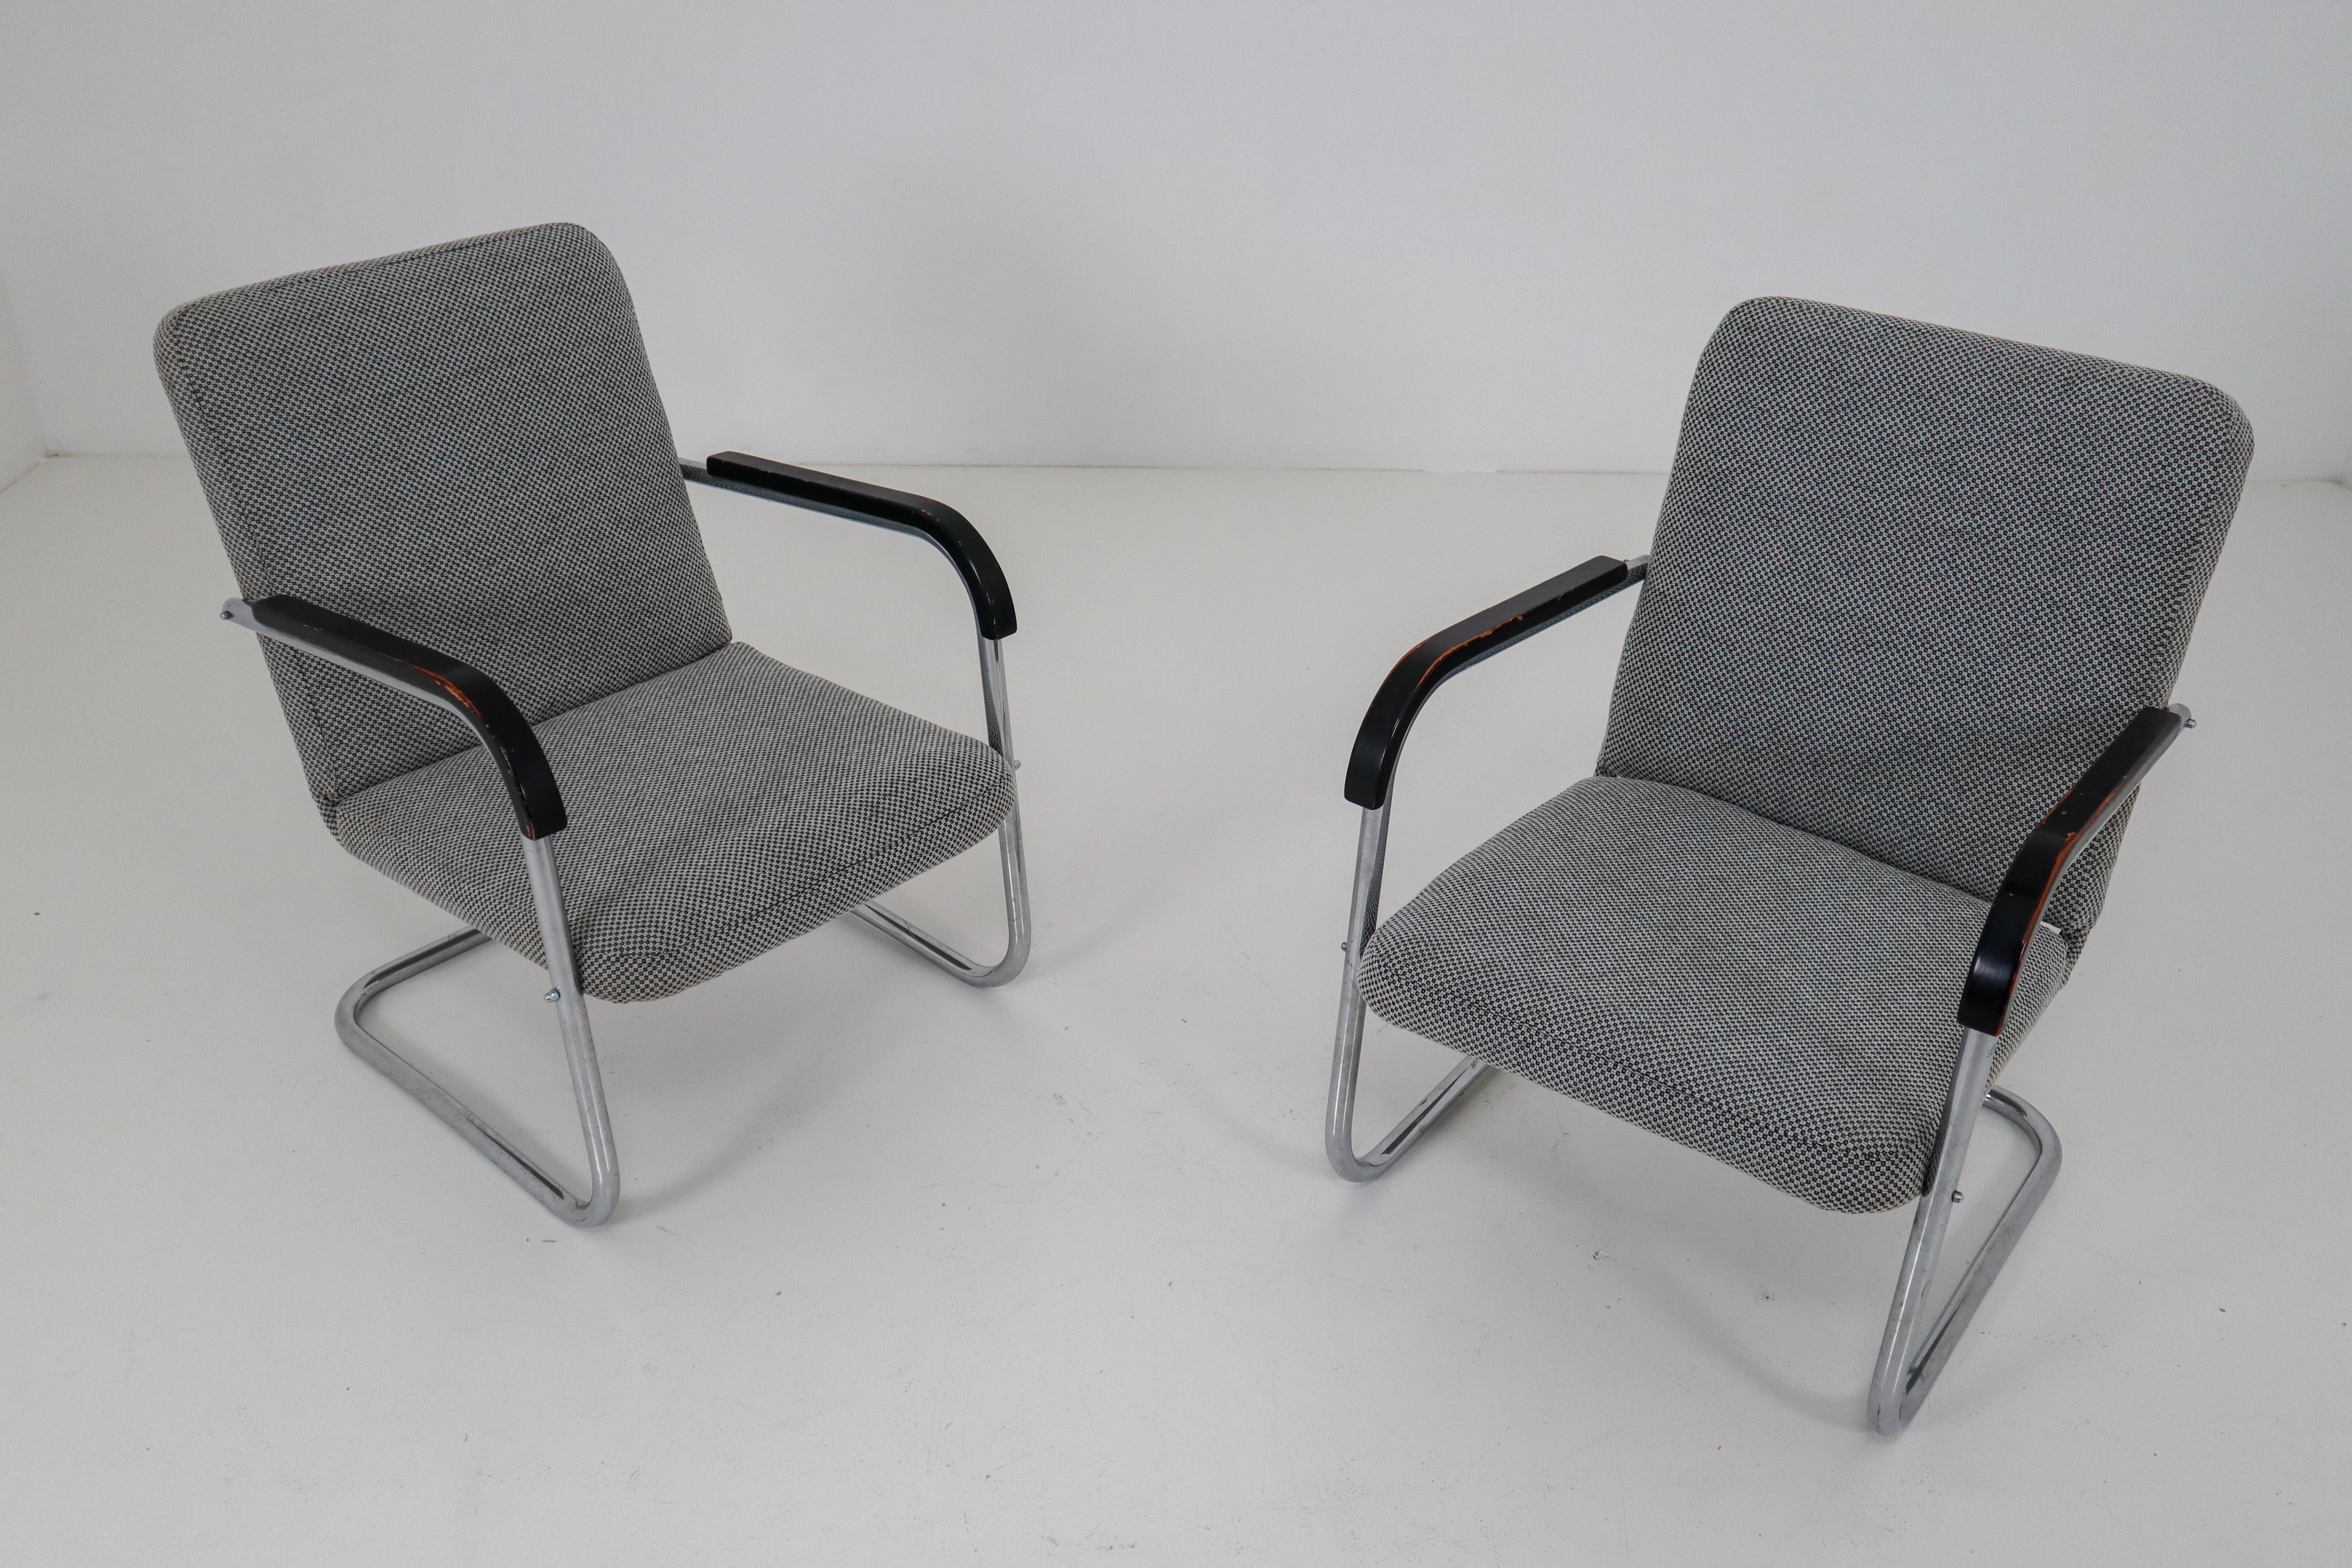 German Pair of Chrome Steel Armchairs by Thonet circa 1930s Midcentury Bauhaus Period